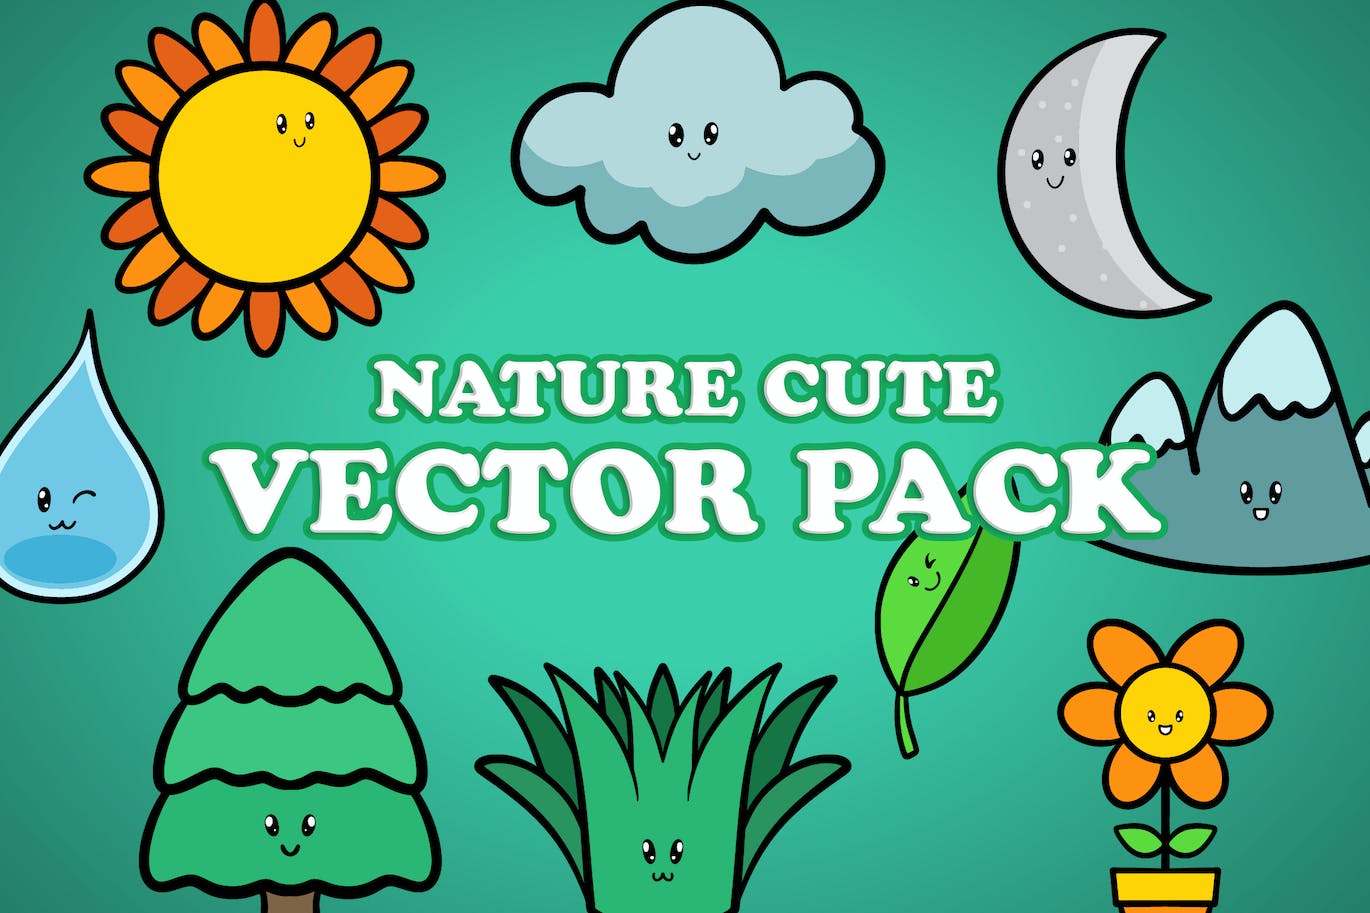 可爱的自然元素矢量插画素材 Cute Nature Element Character Vector Pack 图片素材 第1张